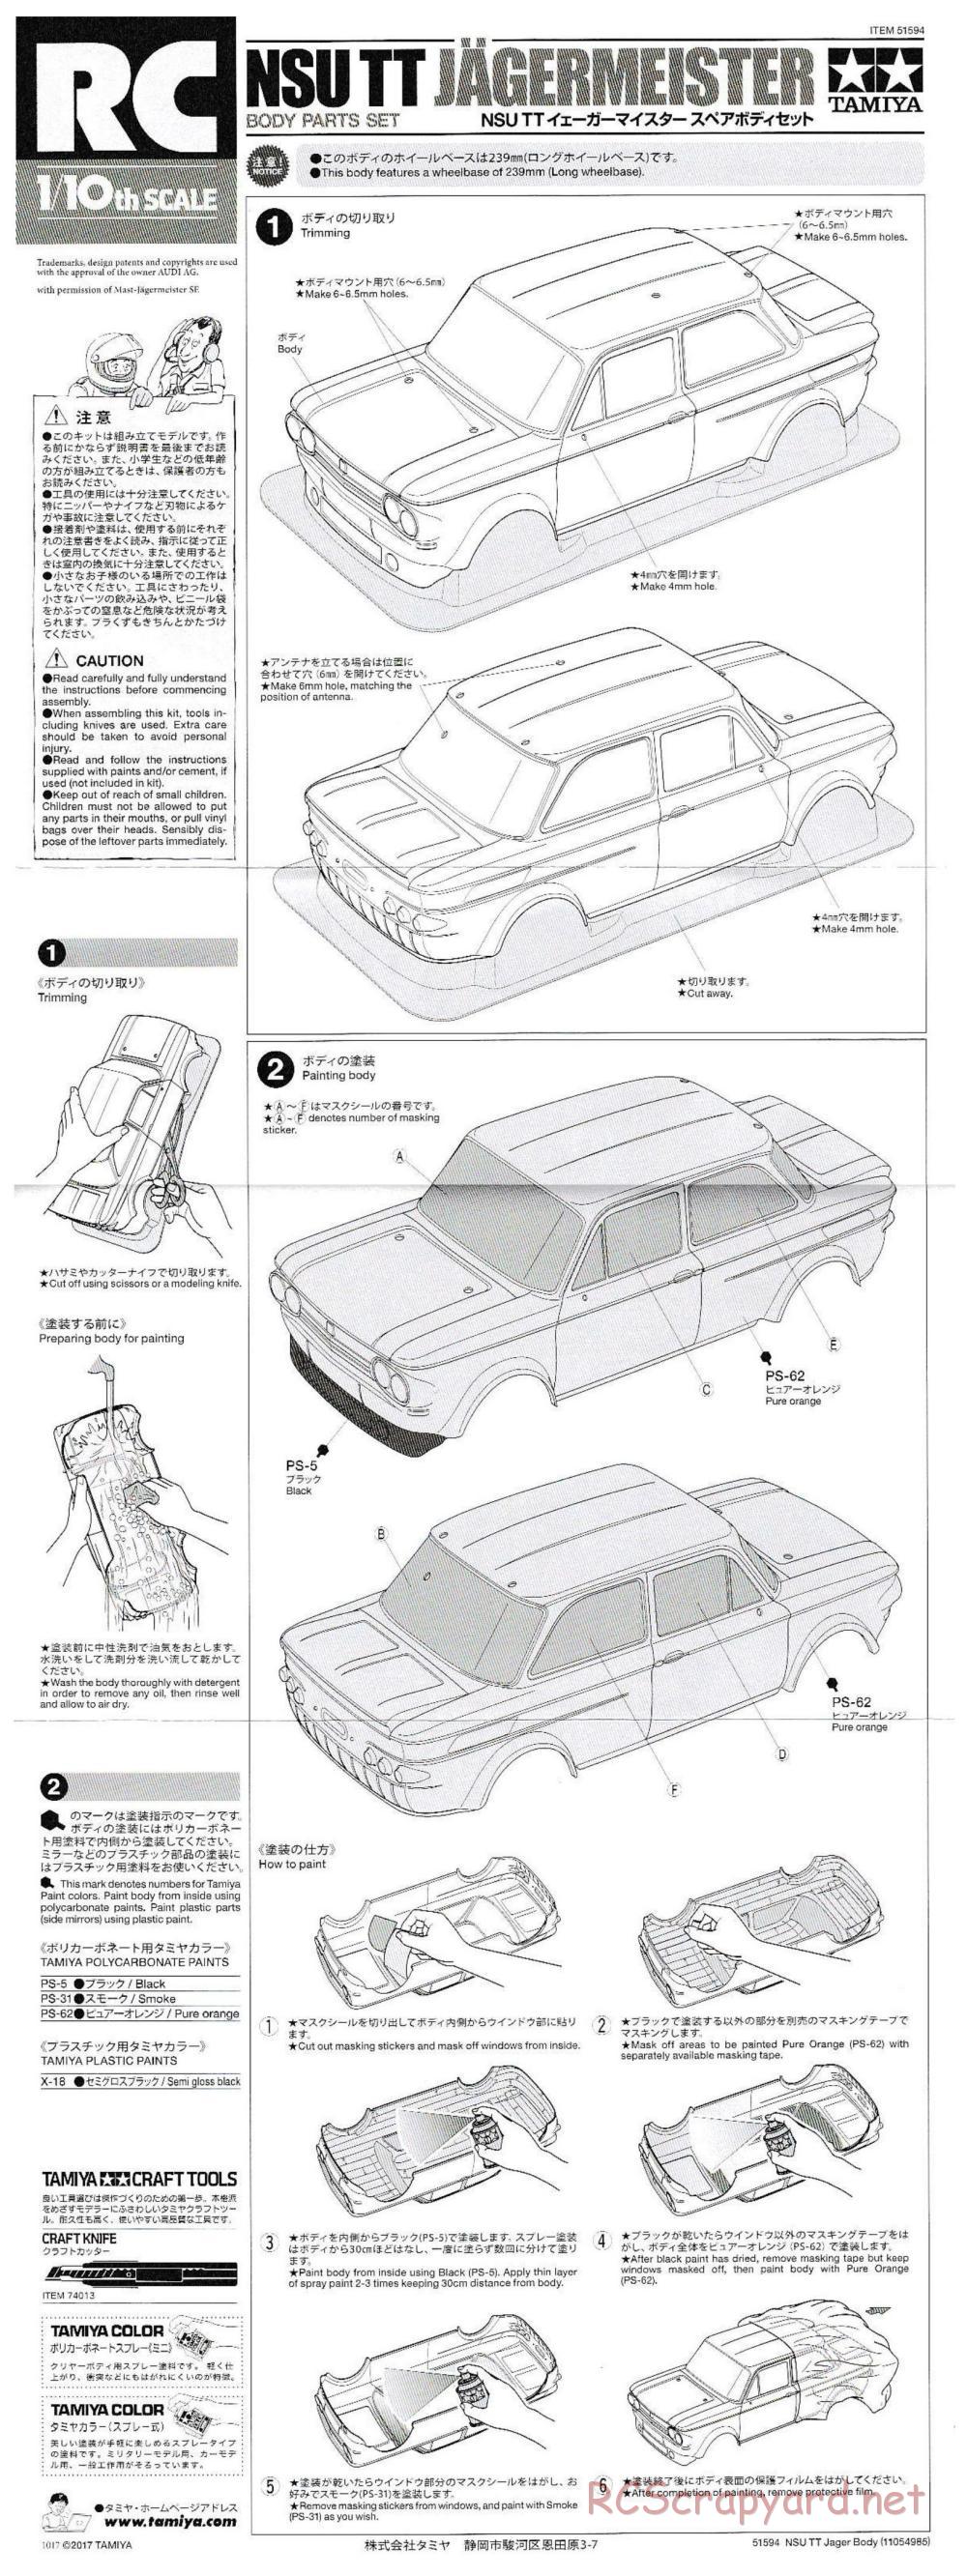 Tamiya - NSU TT Jagermeister - M-05 Chassis - Body Manual - Page 1